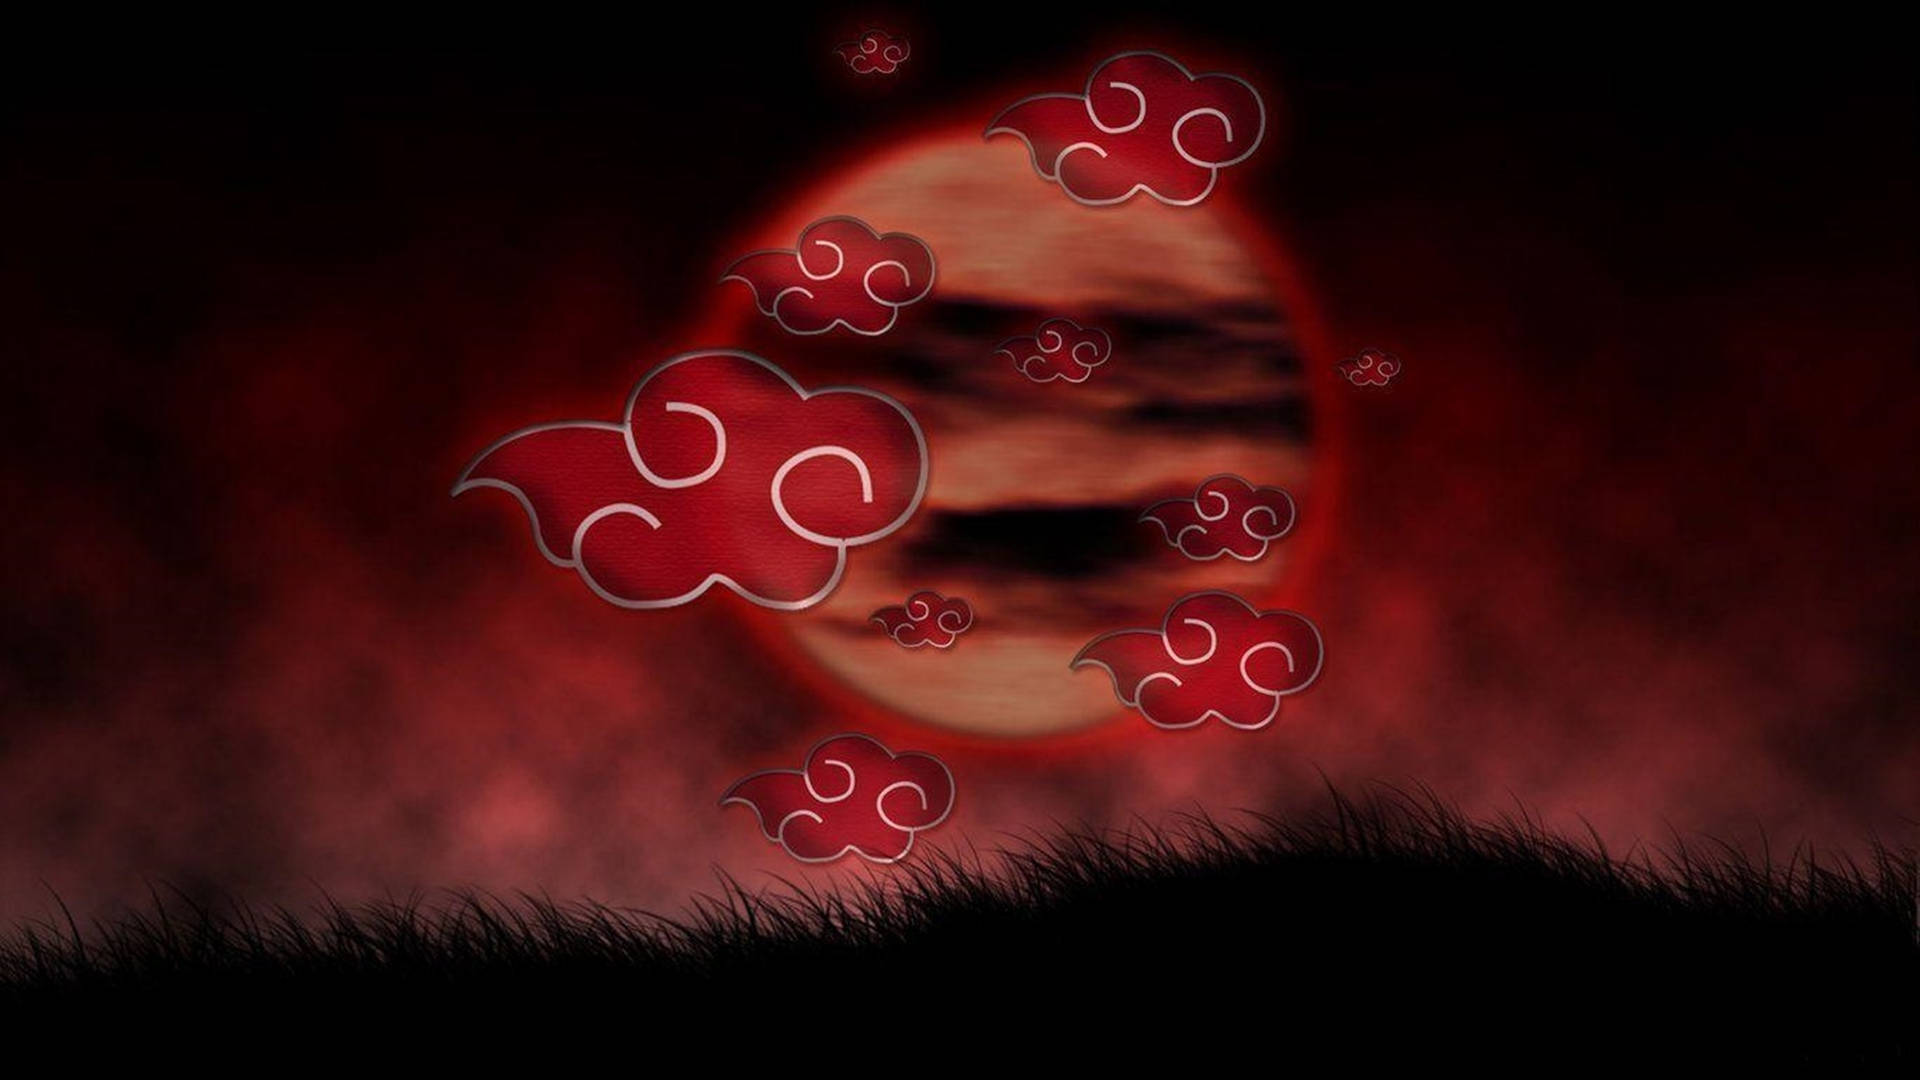 Akatsuki Logo And Blood Moon